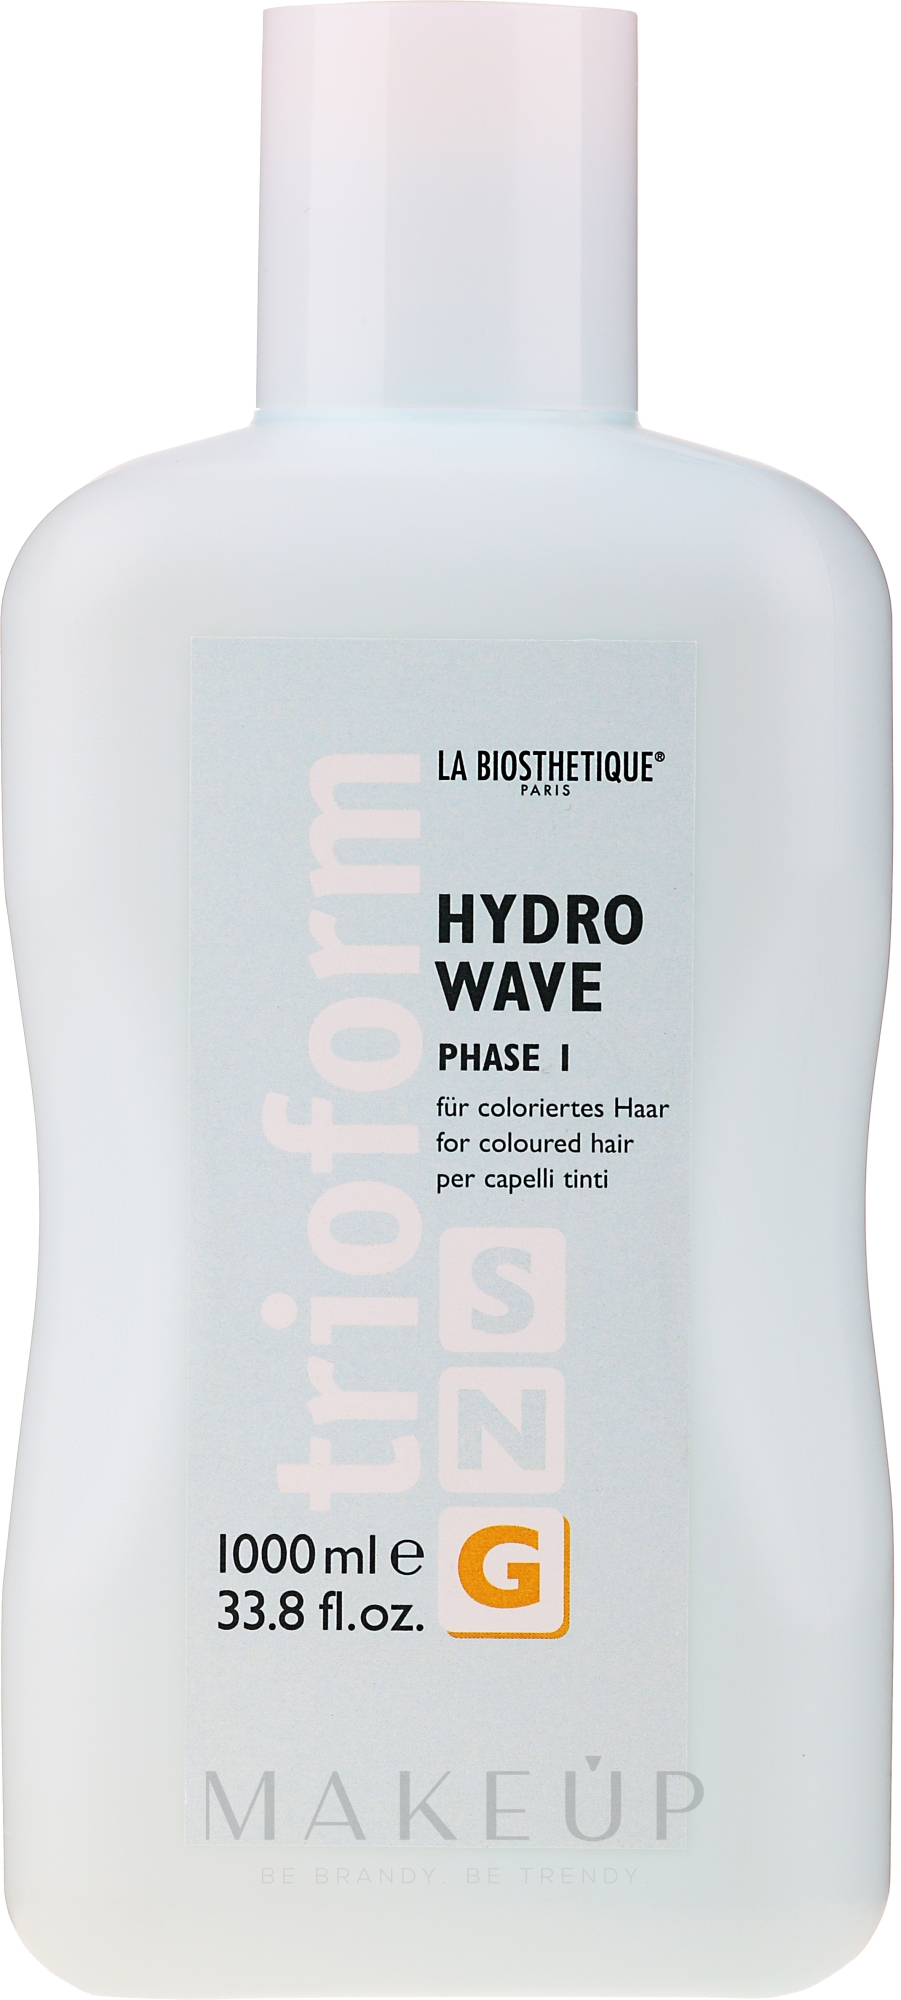 Dauerwellelotion für coloriertes Haar - La Biosthetique TrioForm Hydrowave G Professional Use — Bild 1000 ml